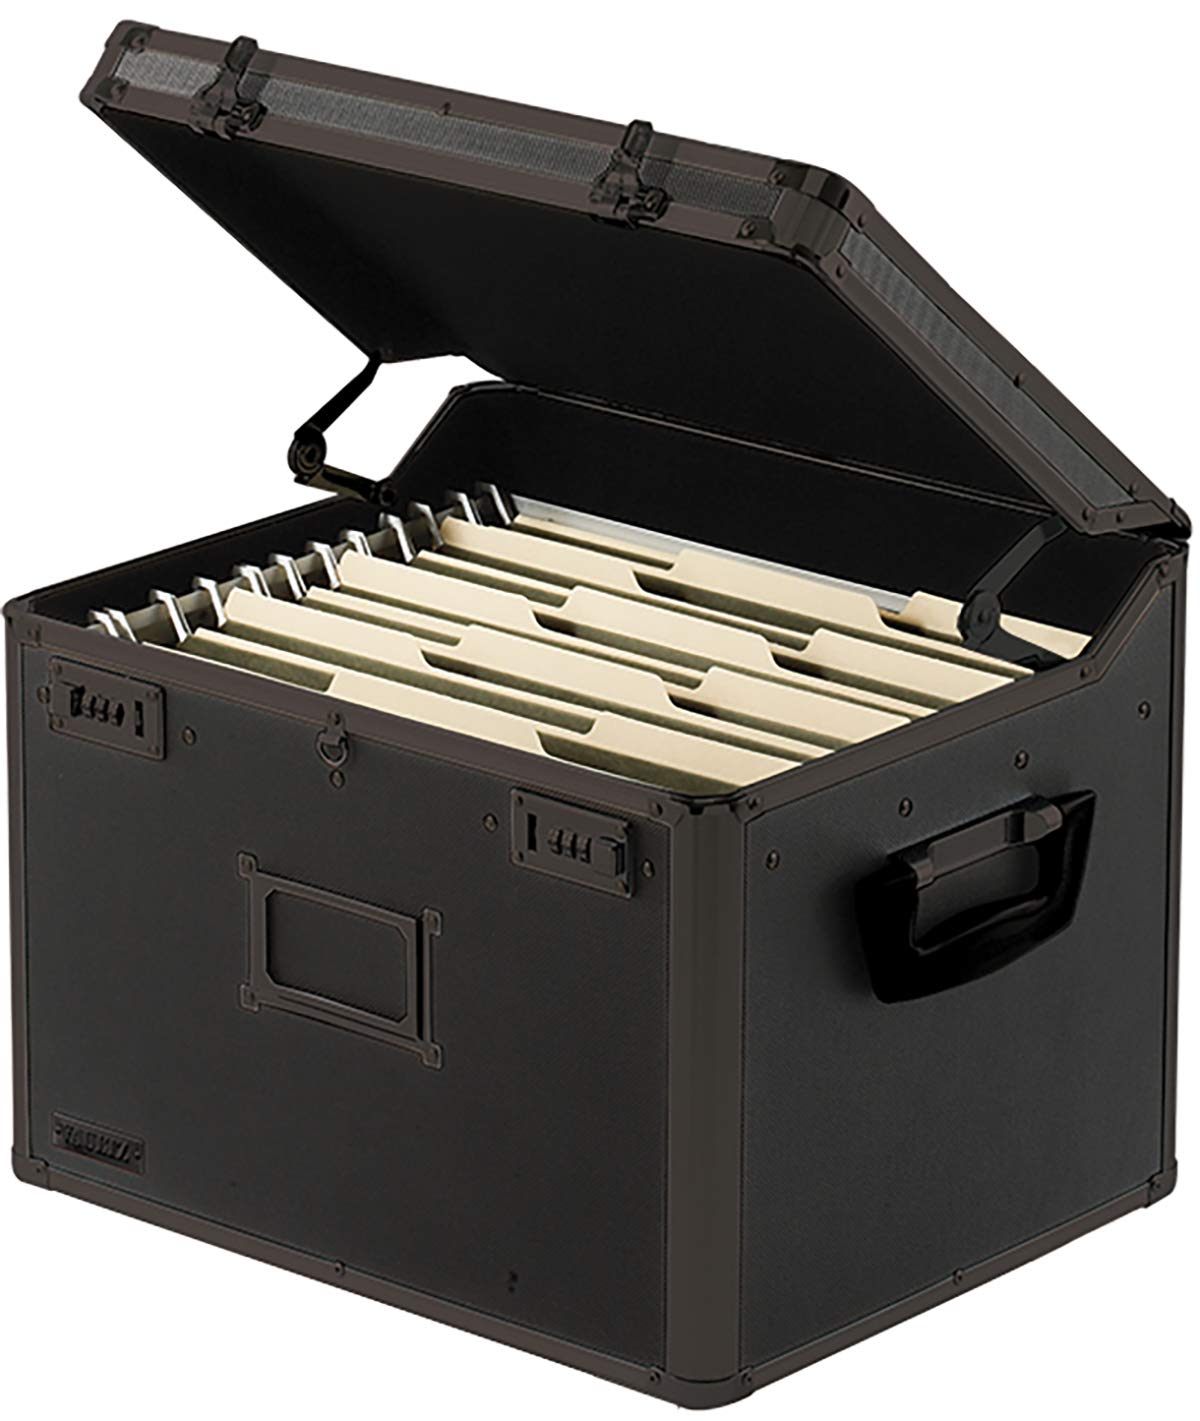 Locking File Storage Box - Two-Handled - Letter/Legal File Storage